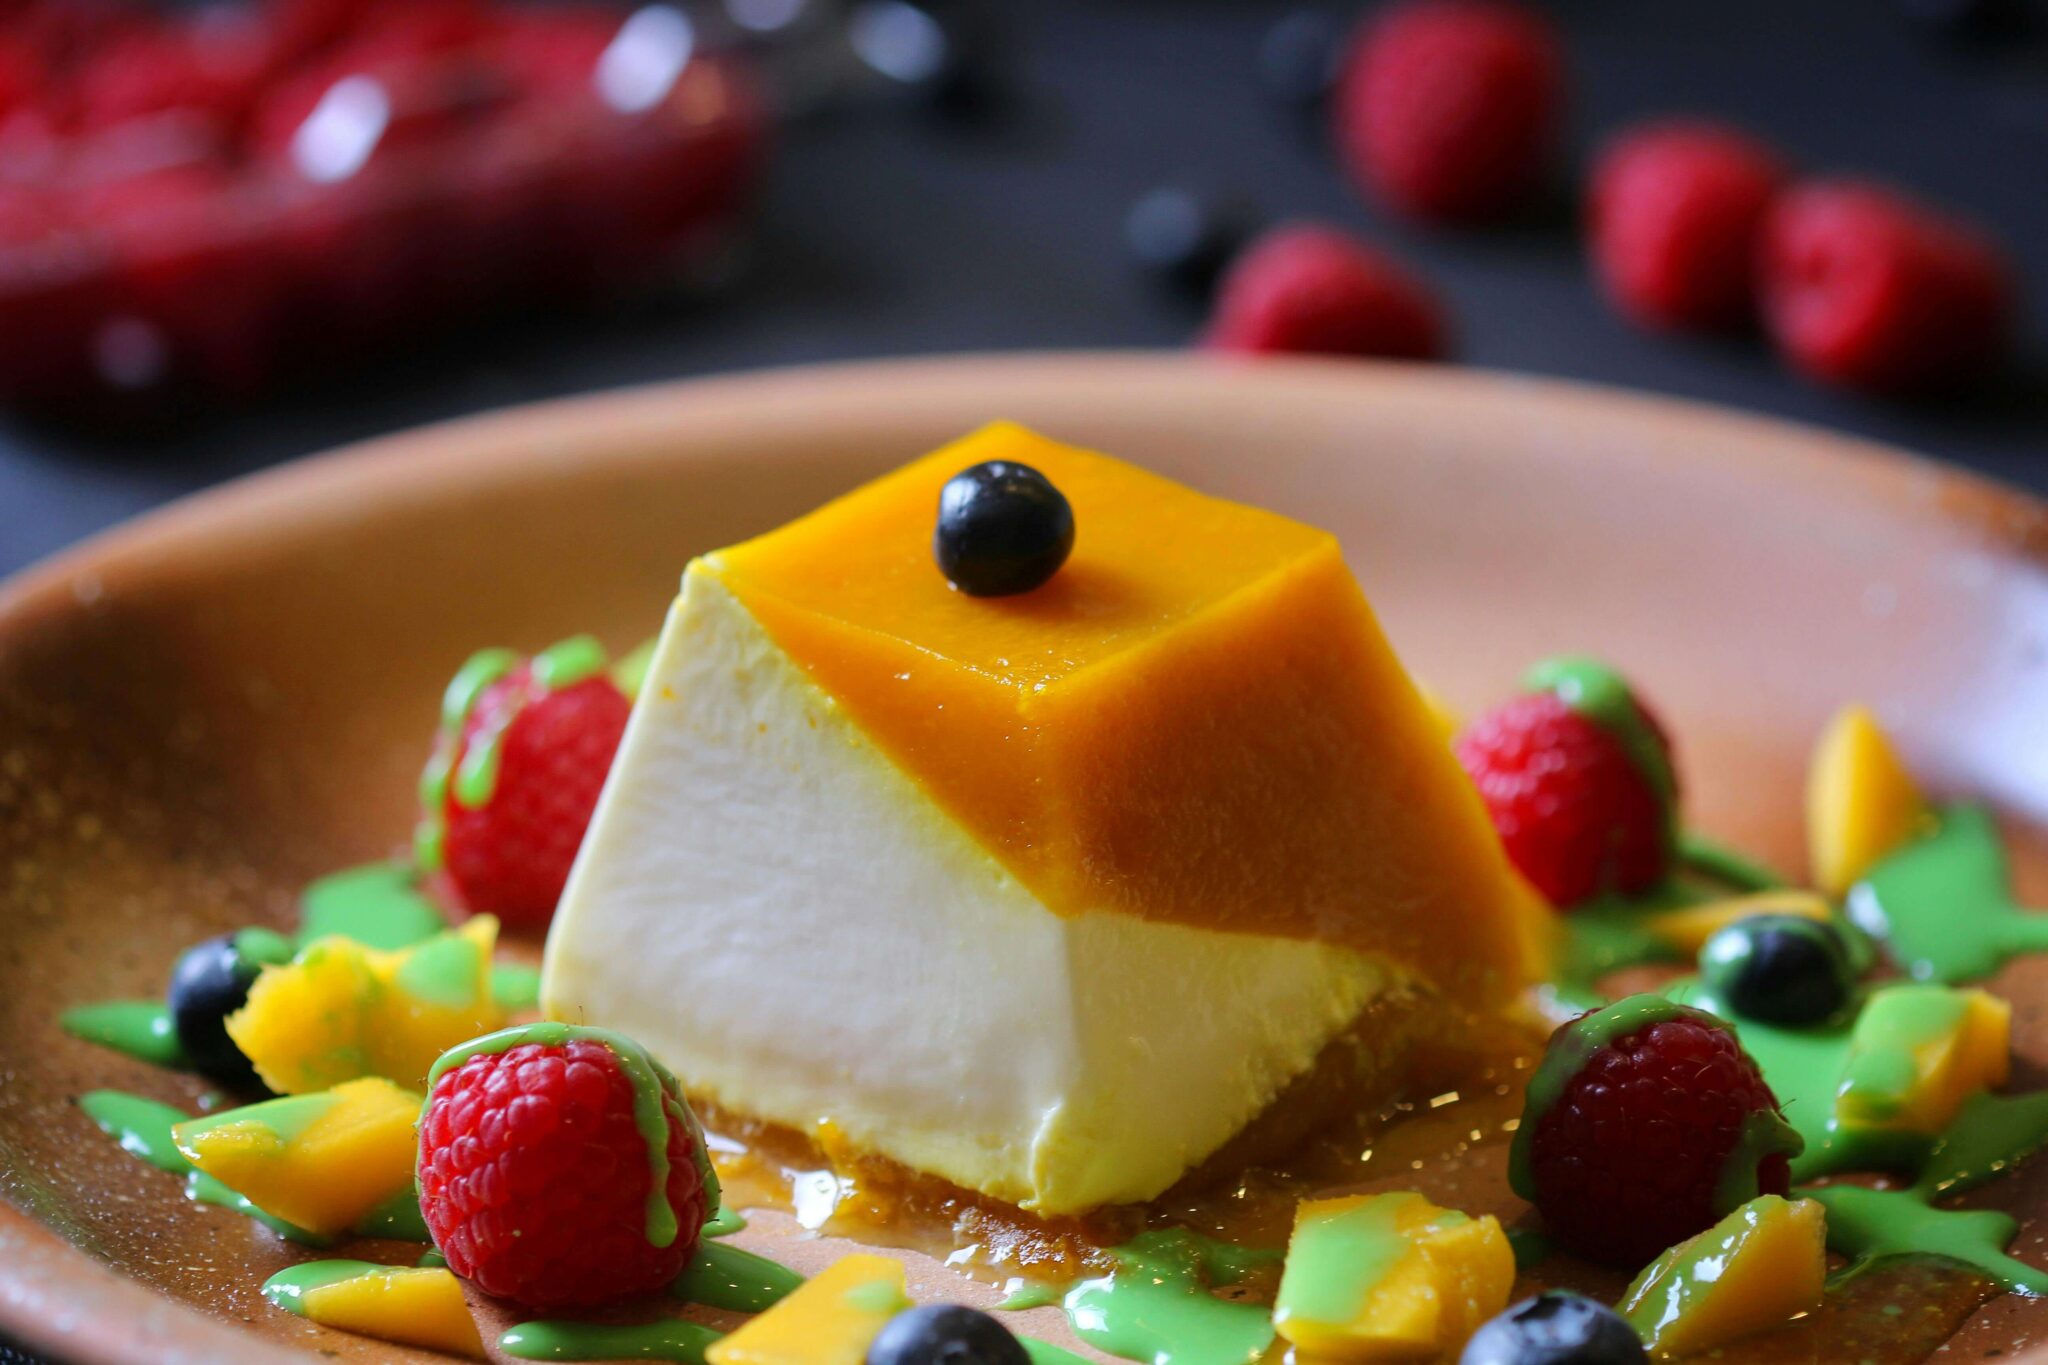 Panna cotta dessert with caramel and fruits